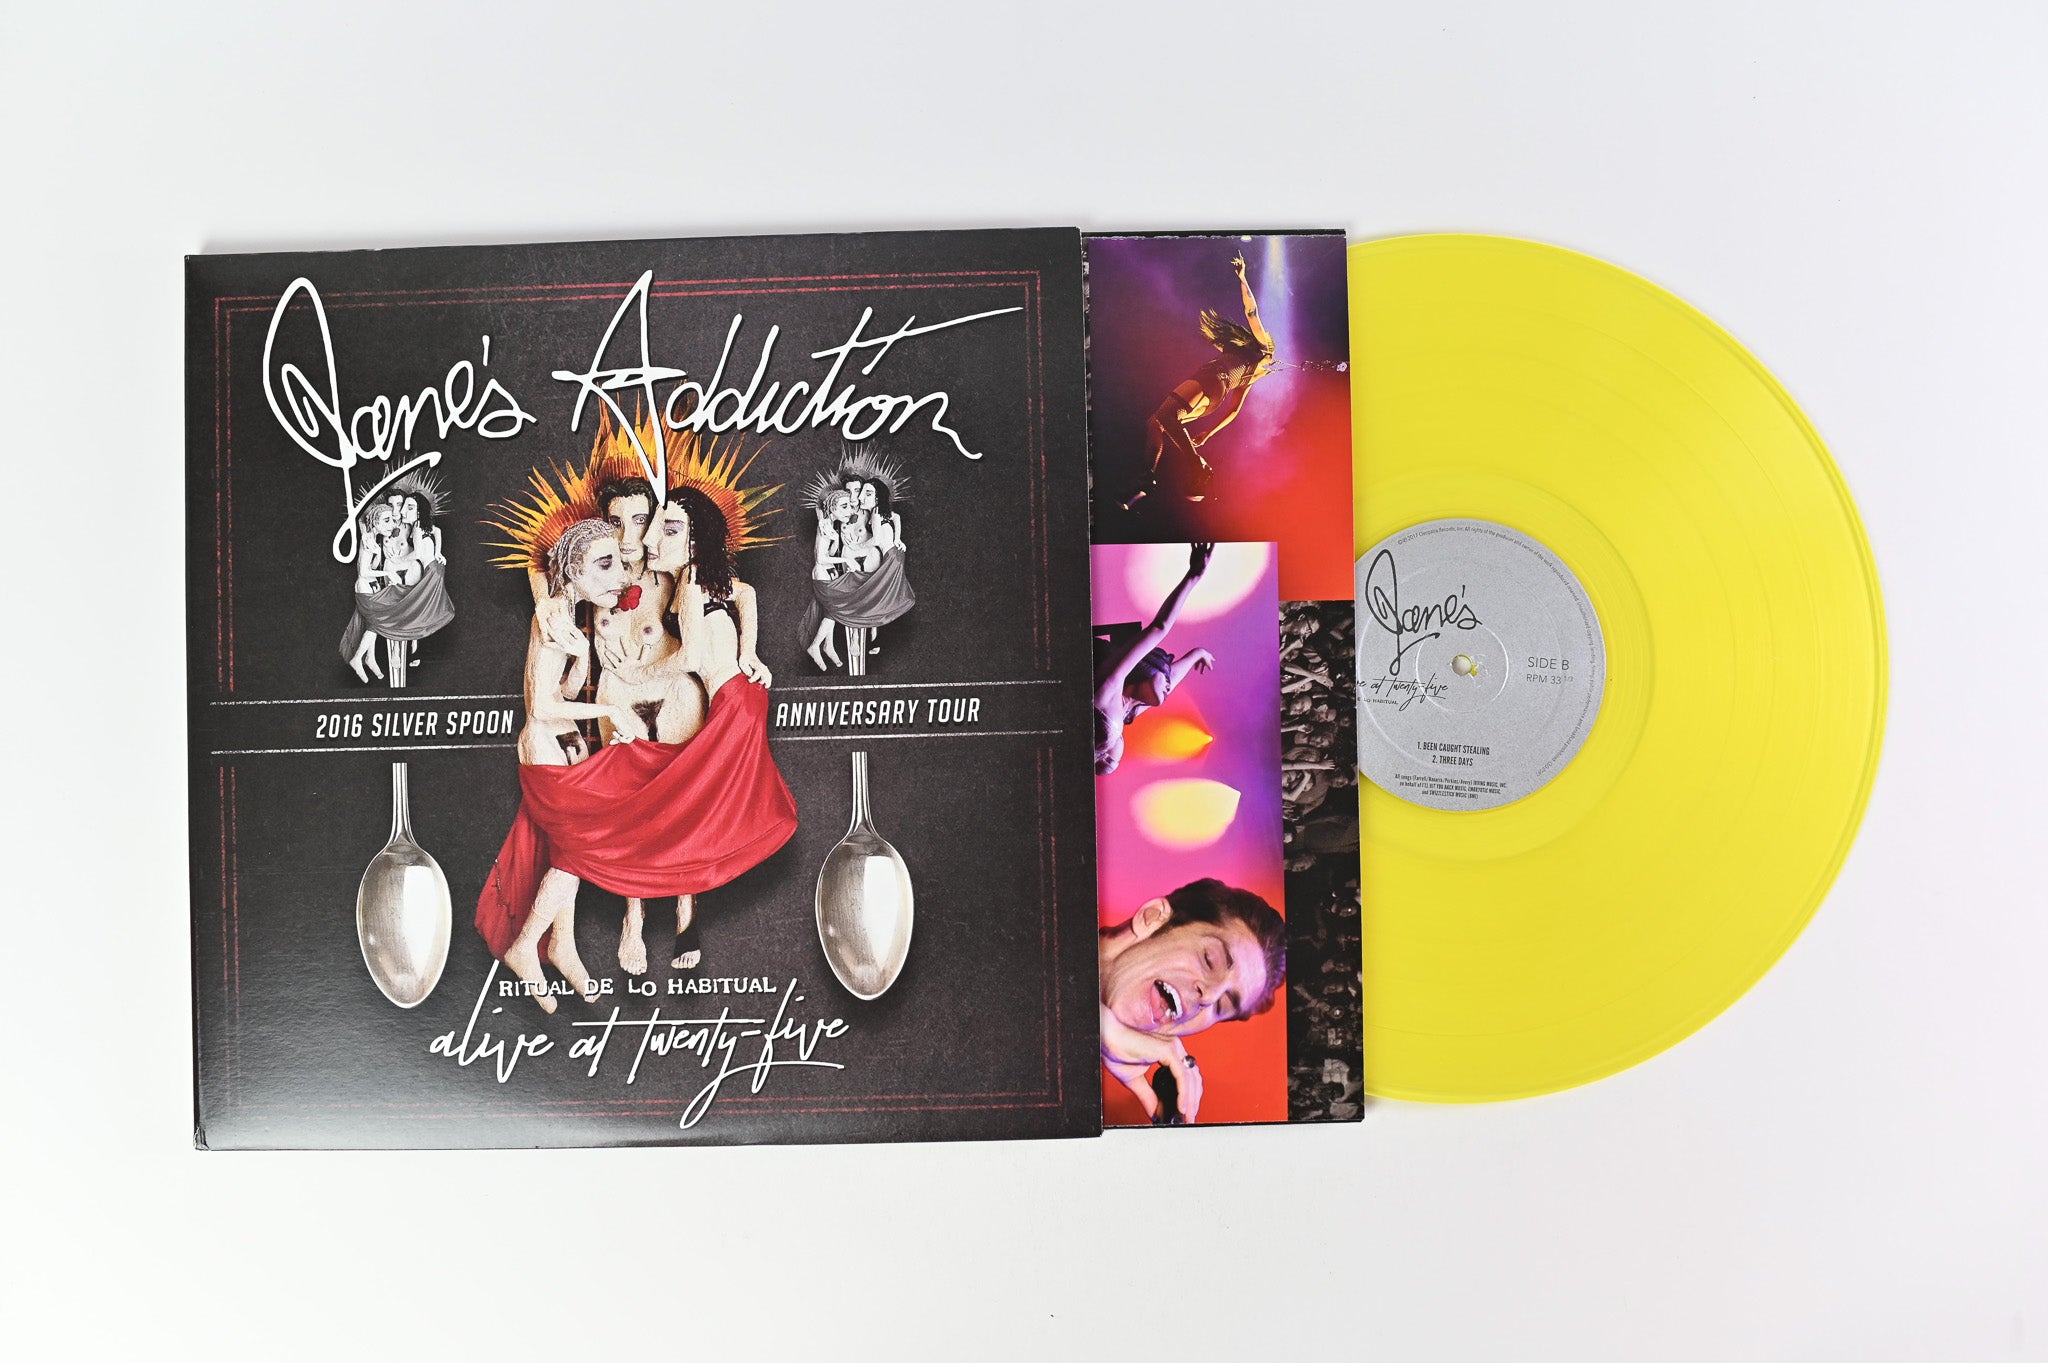 Jane's Addiction - Alive At Twenty-Five - Ritual De Lo Habitual on Cleopatra Ltd Yellow Vinyl Reissue